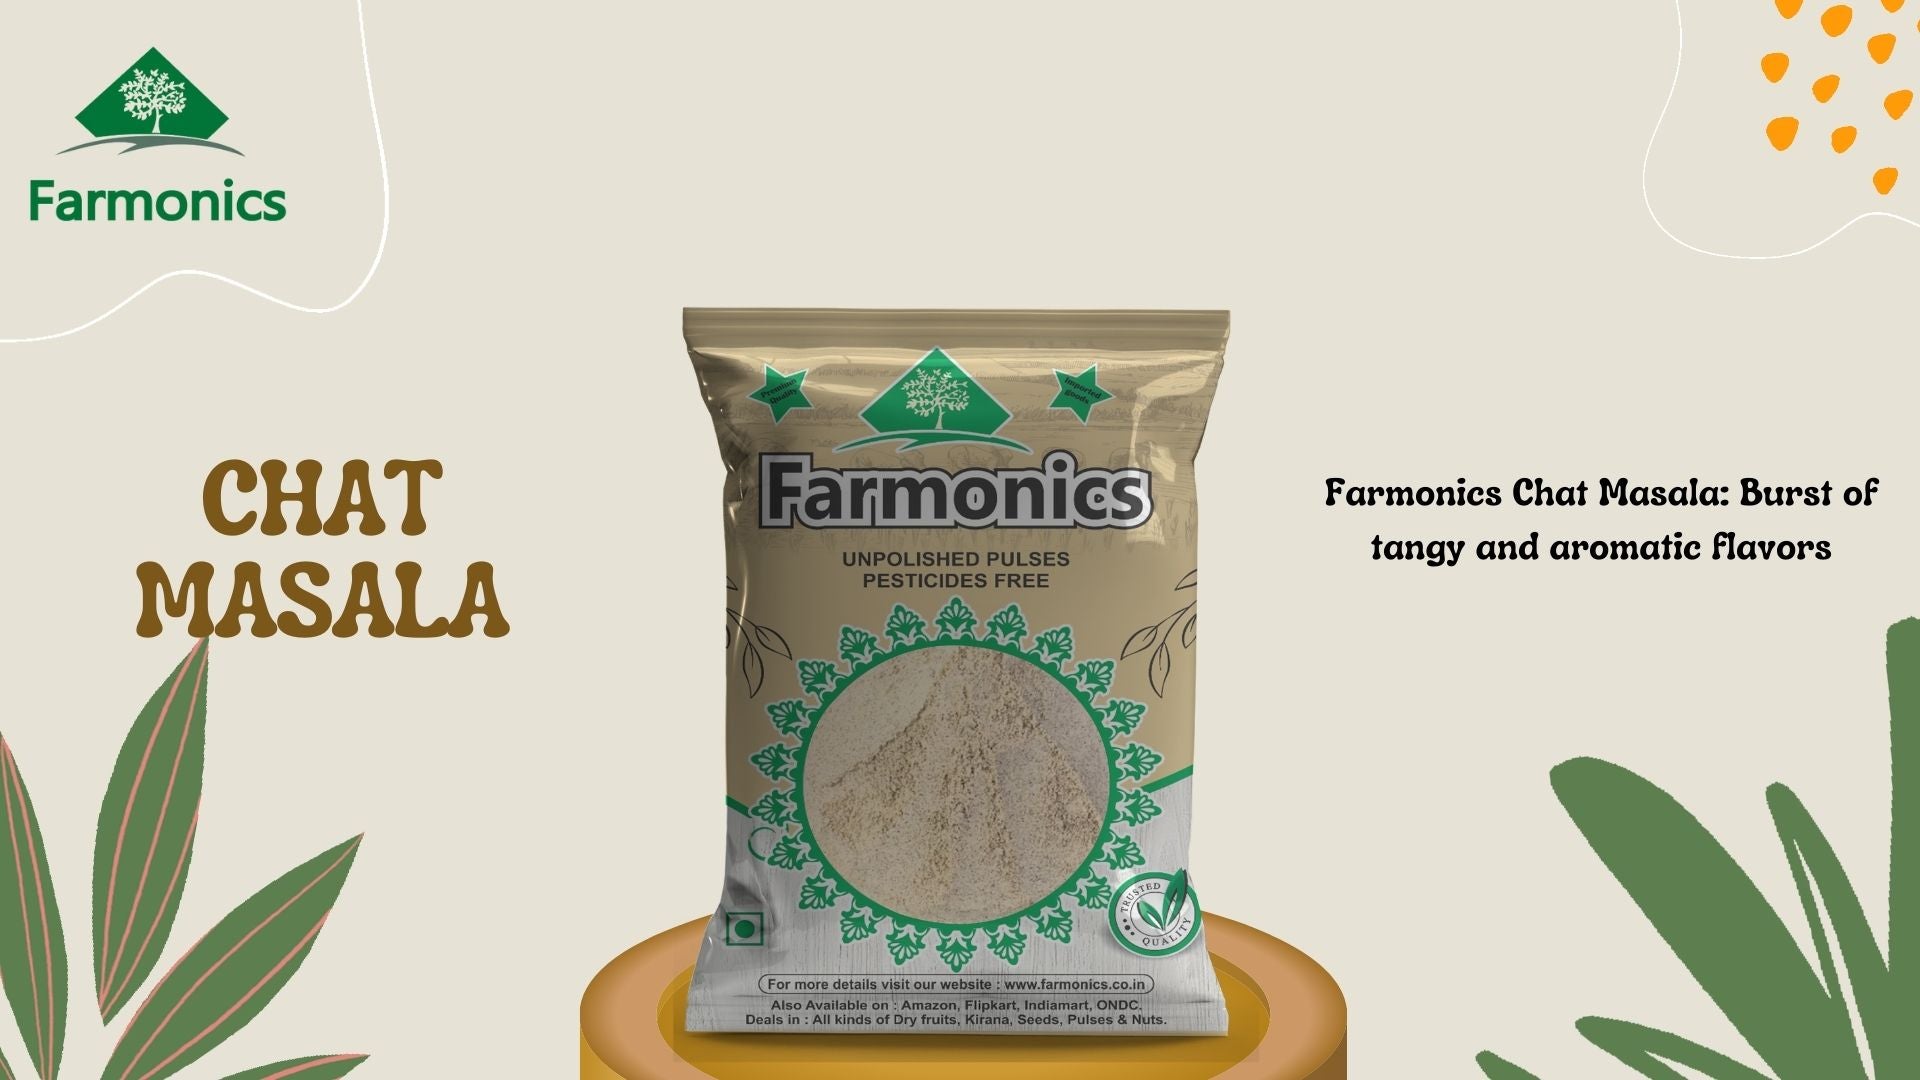 Farmonics chat masala burst of tangy and aromatic flavors